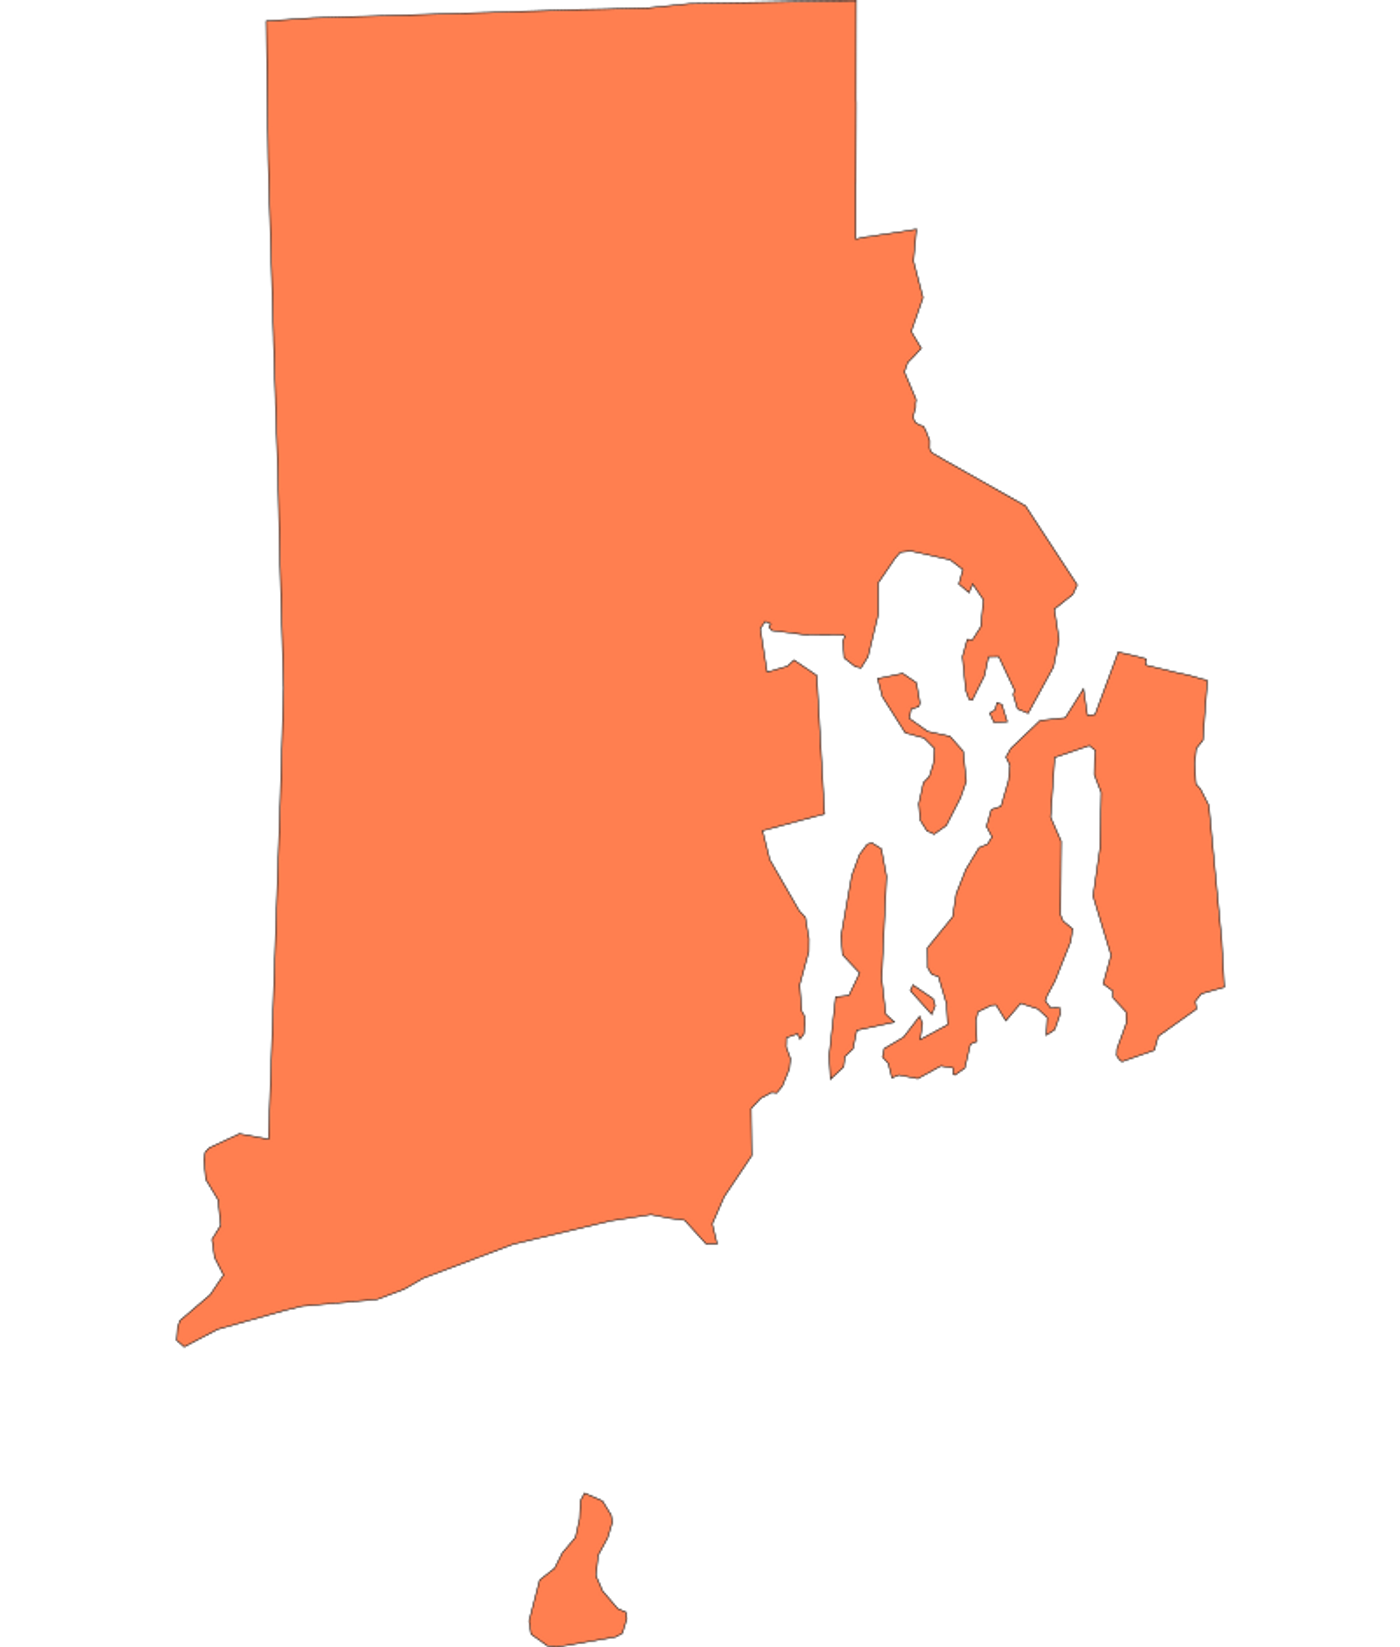 Rhode Island Outline